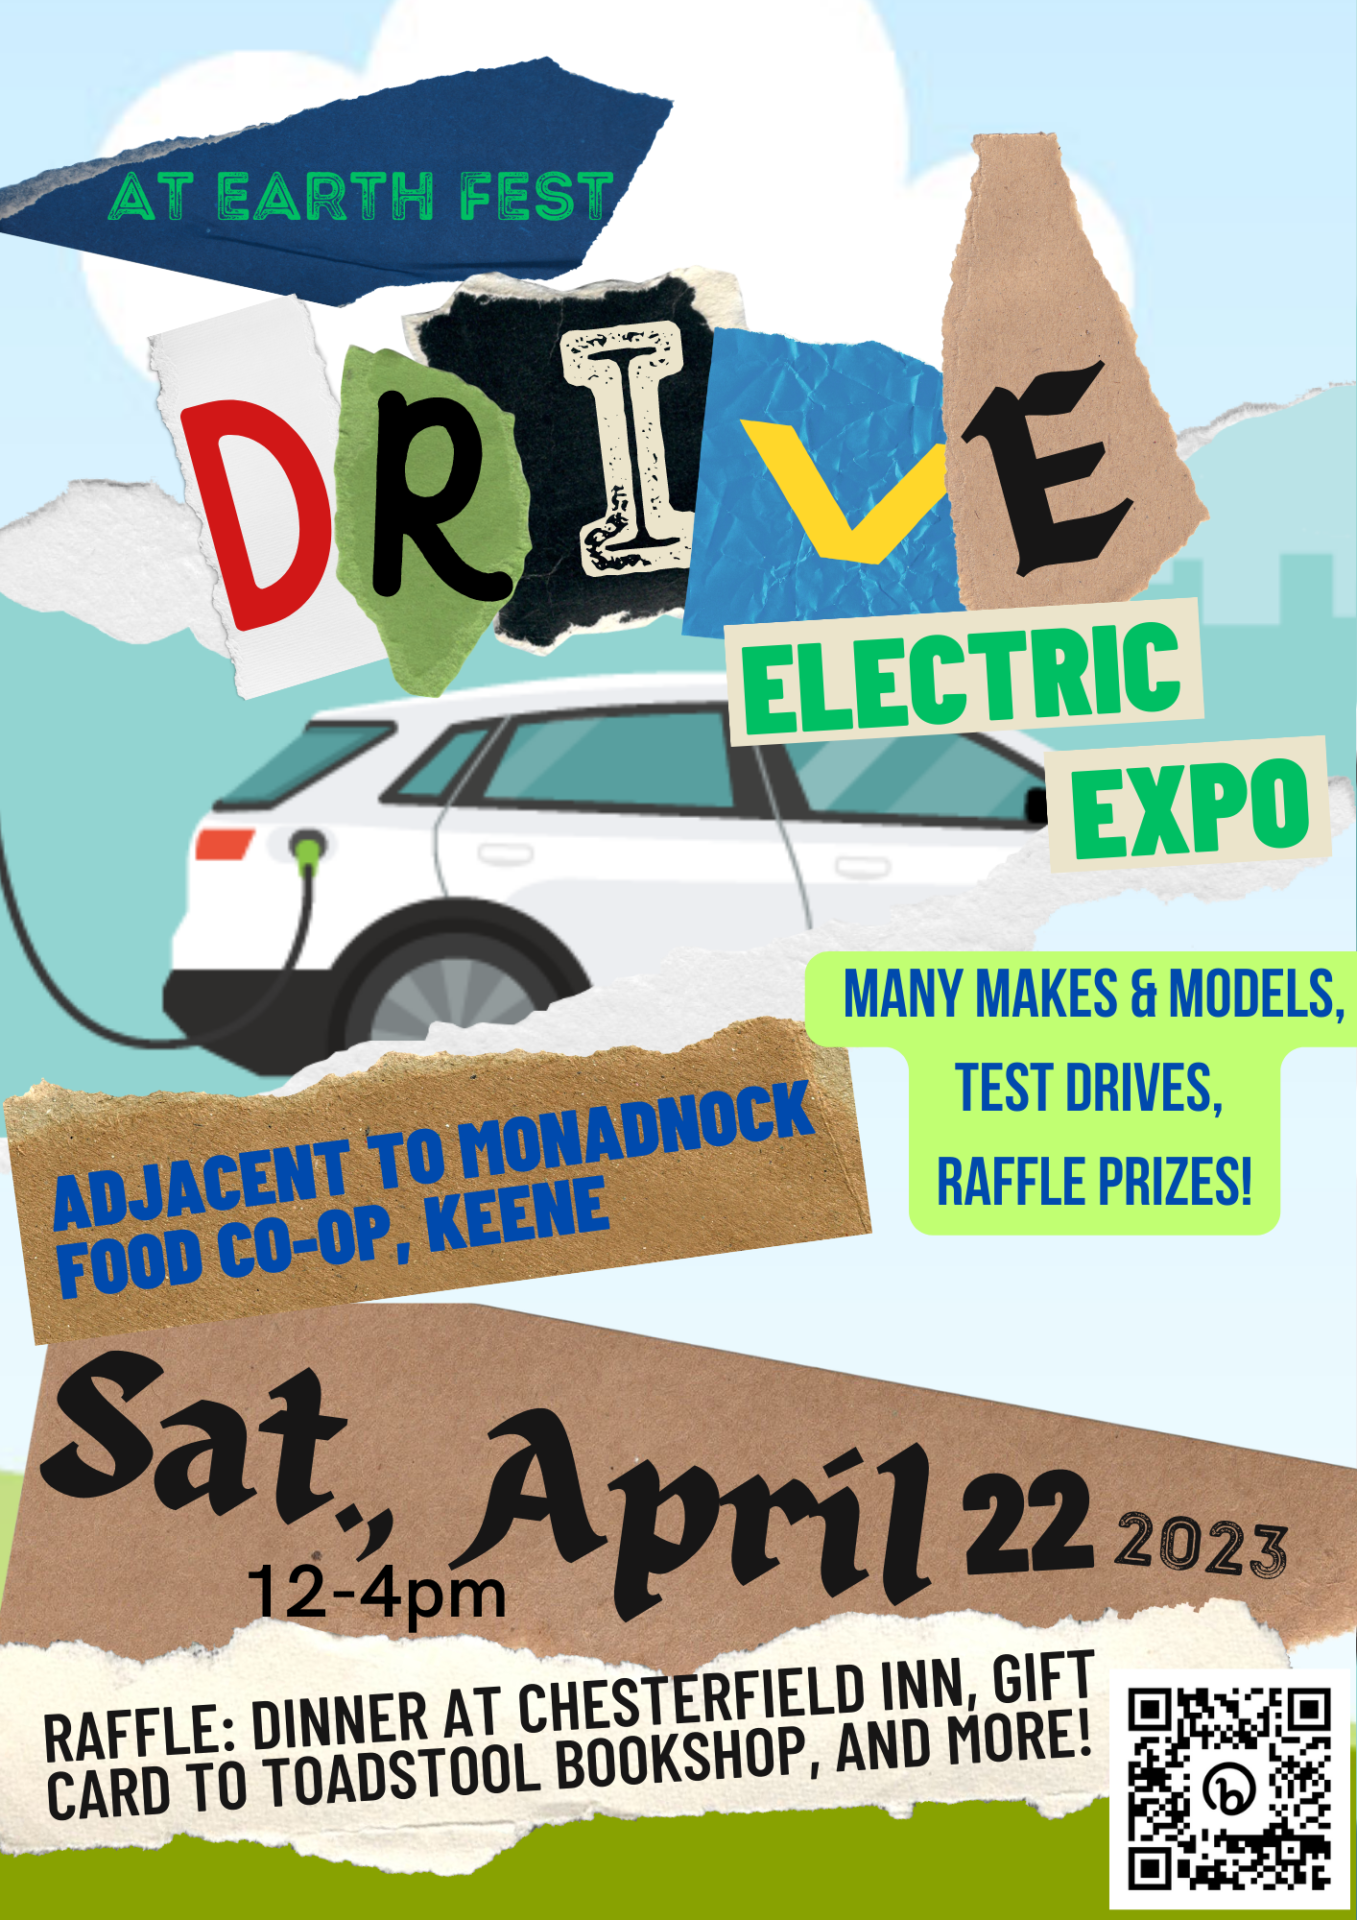 Drive Electric event details